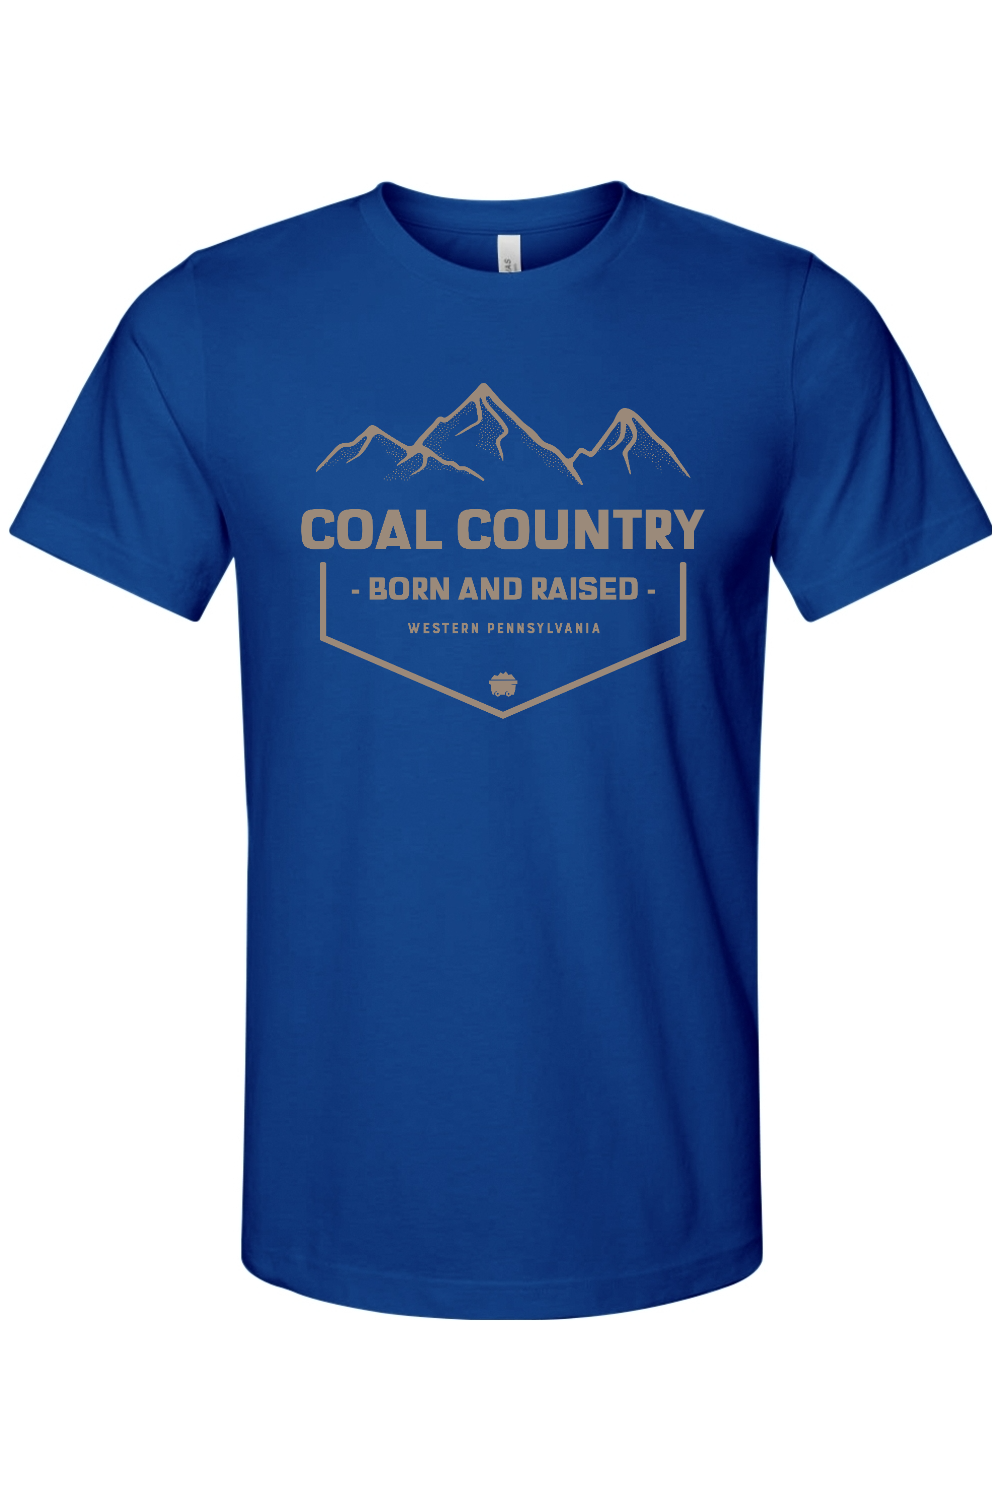 Coal Country - Bella + Canvas Jersey Tee - Yinzylvania